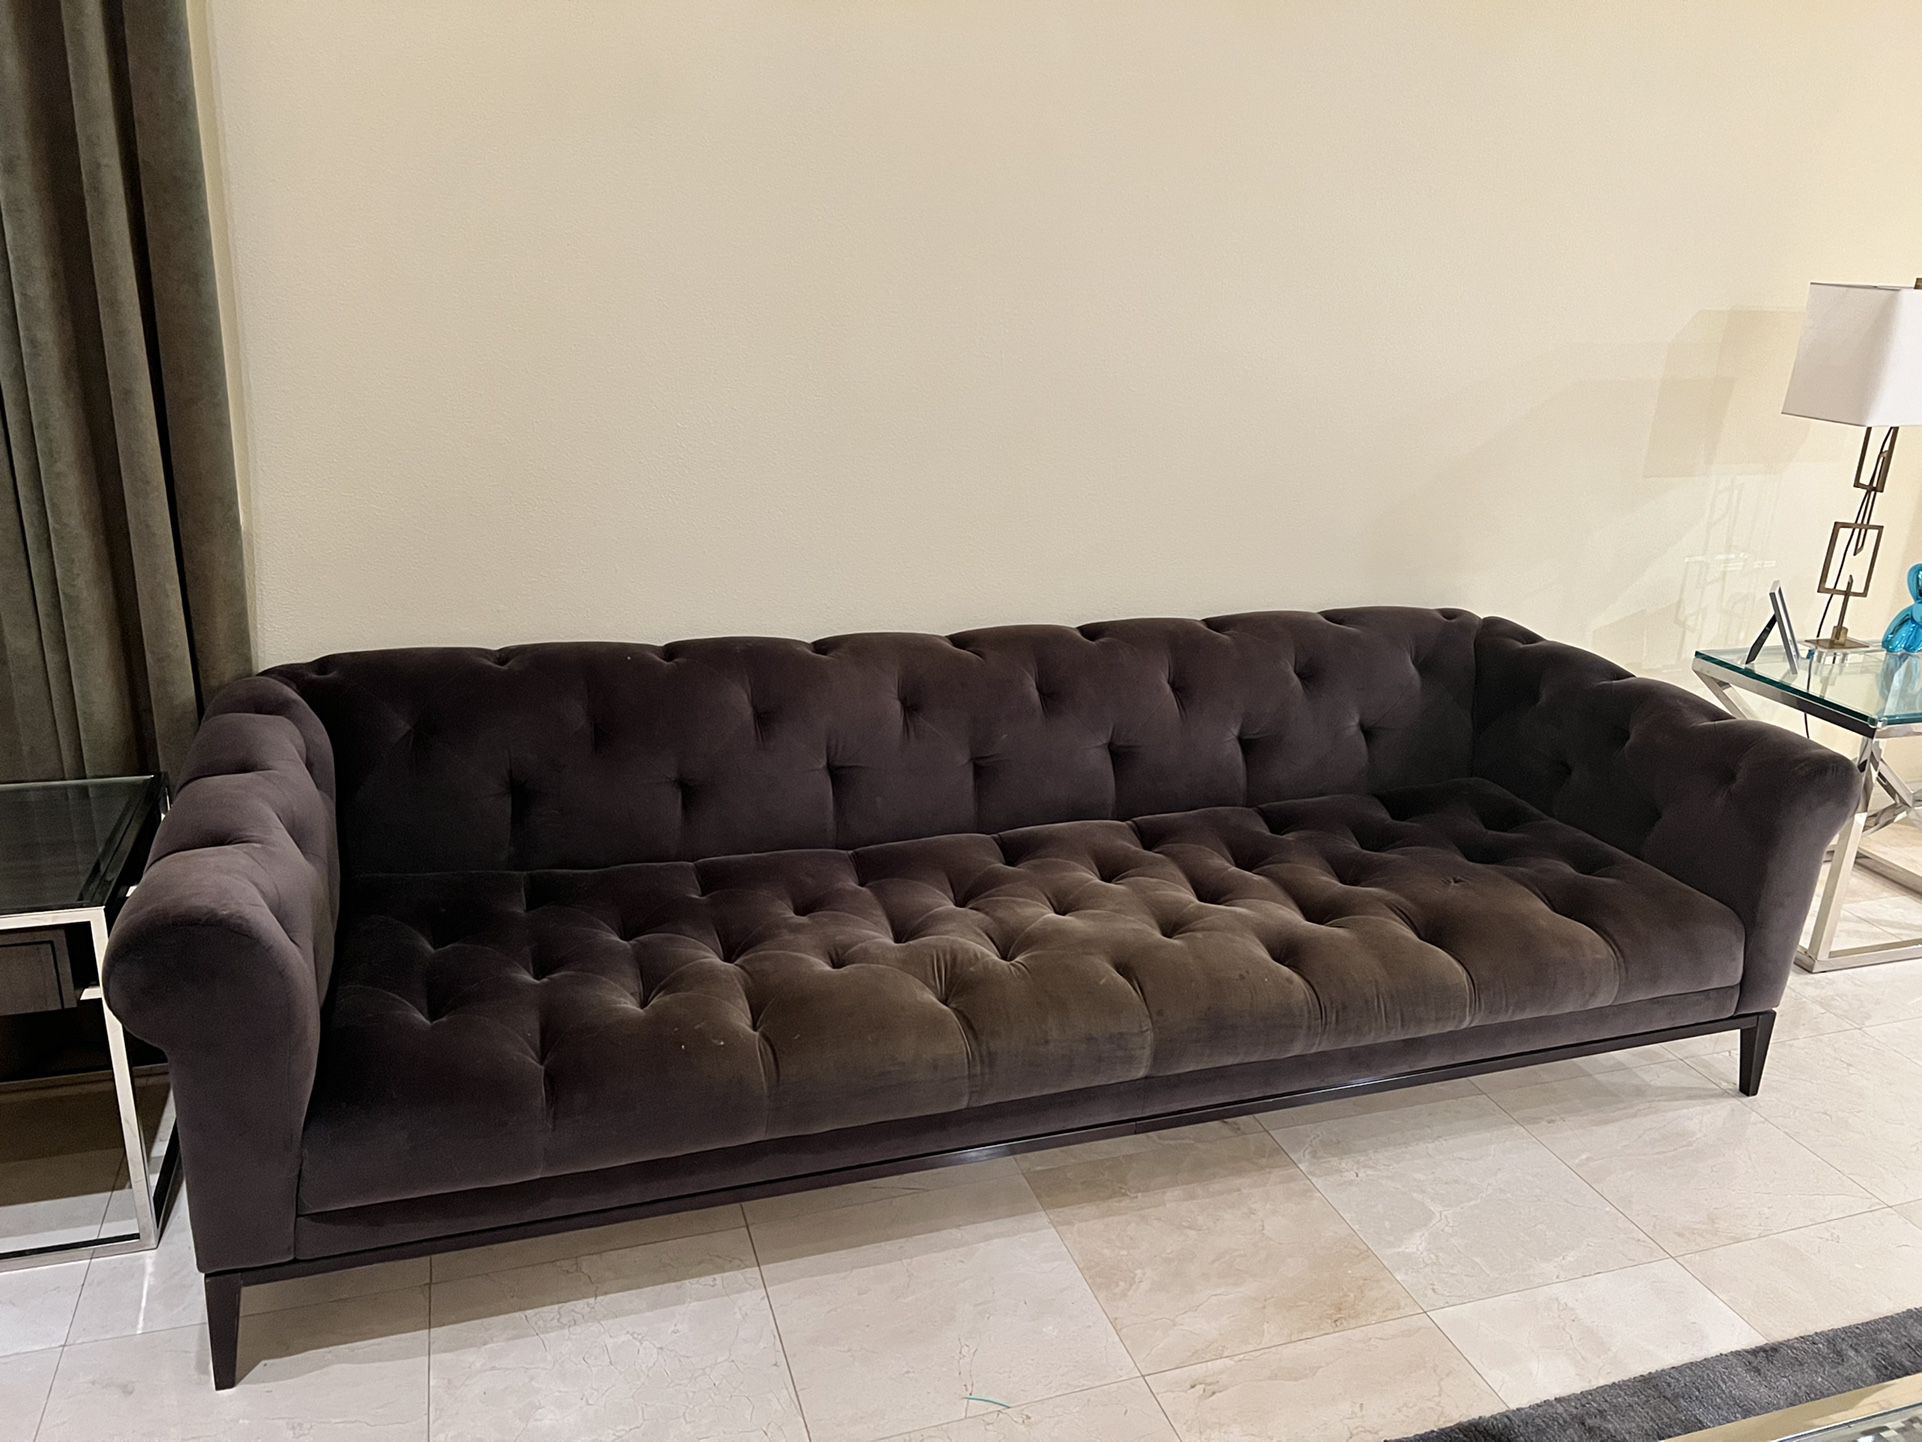 St gezond verstand Eik Restoration Hardware RH Modern 9' Italia Chesterfield Favric Sofa for Sale  in Los Angeles, CA - OfferUp